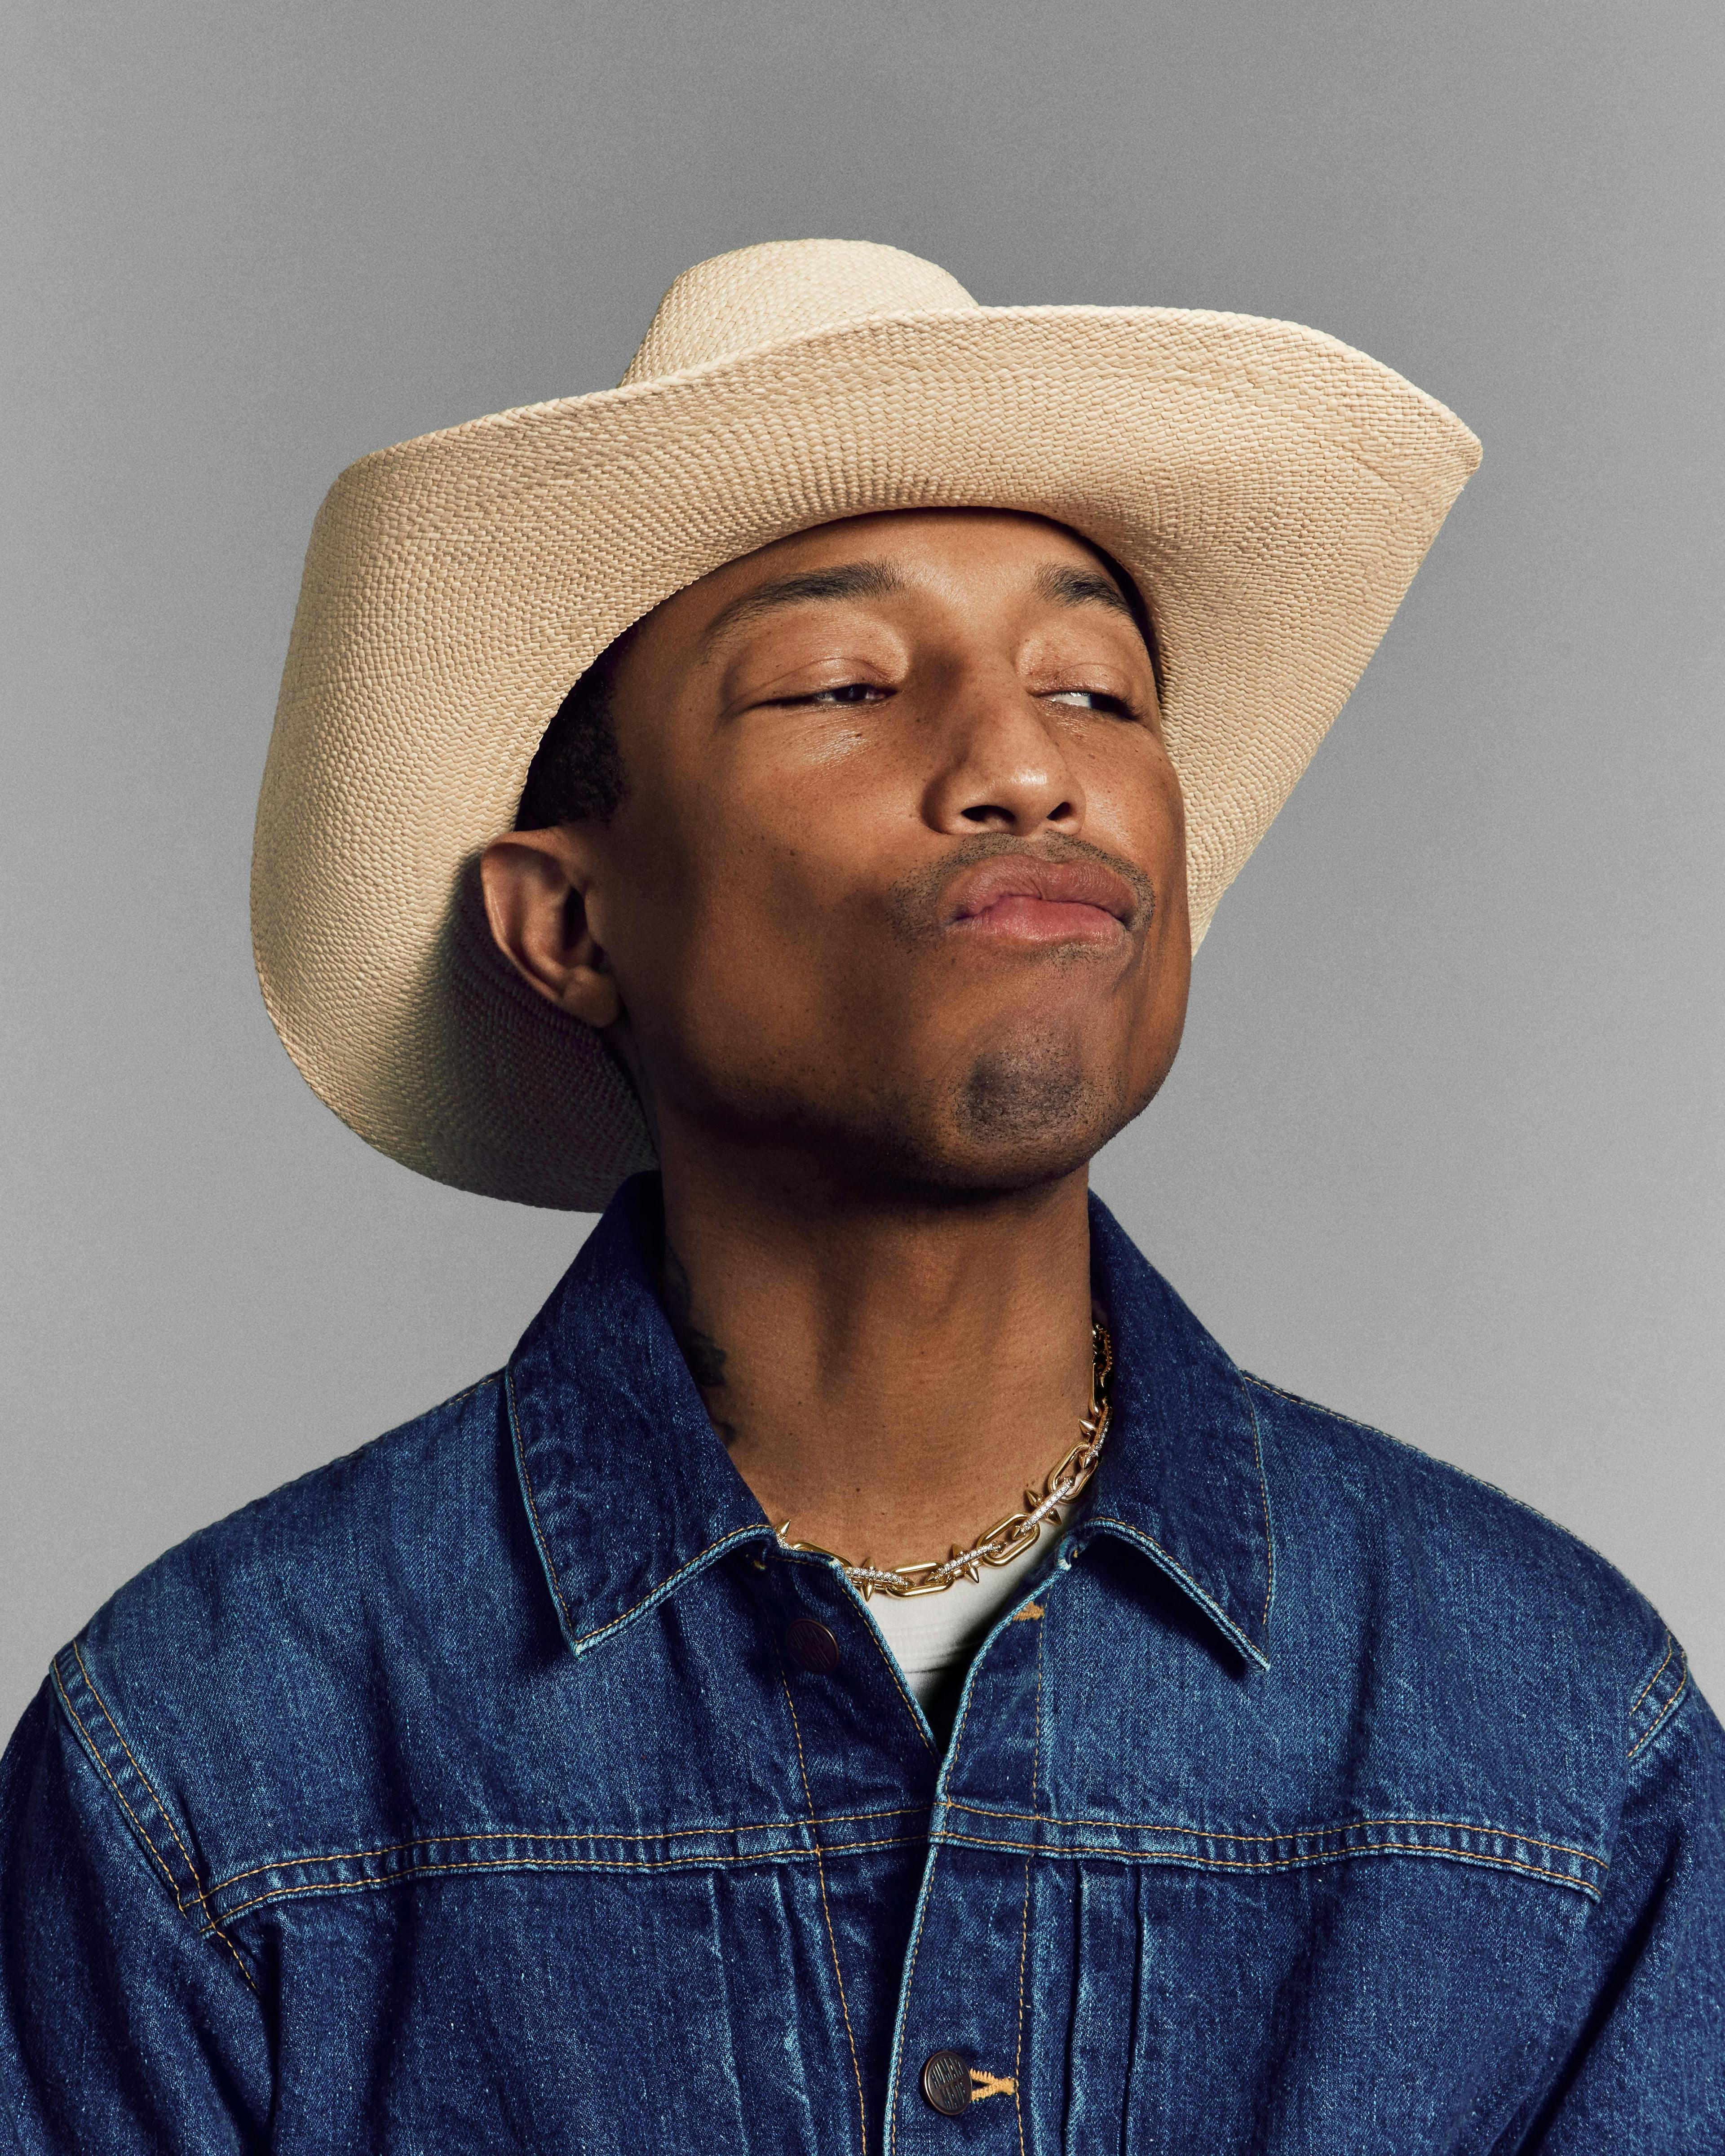 pharrell williams wearing a denim jacket, cowboy hat, and tiffany titan jewelry